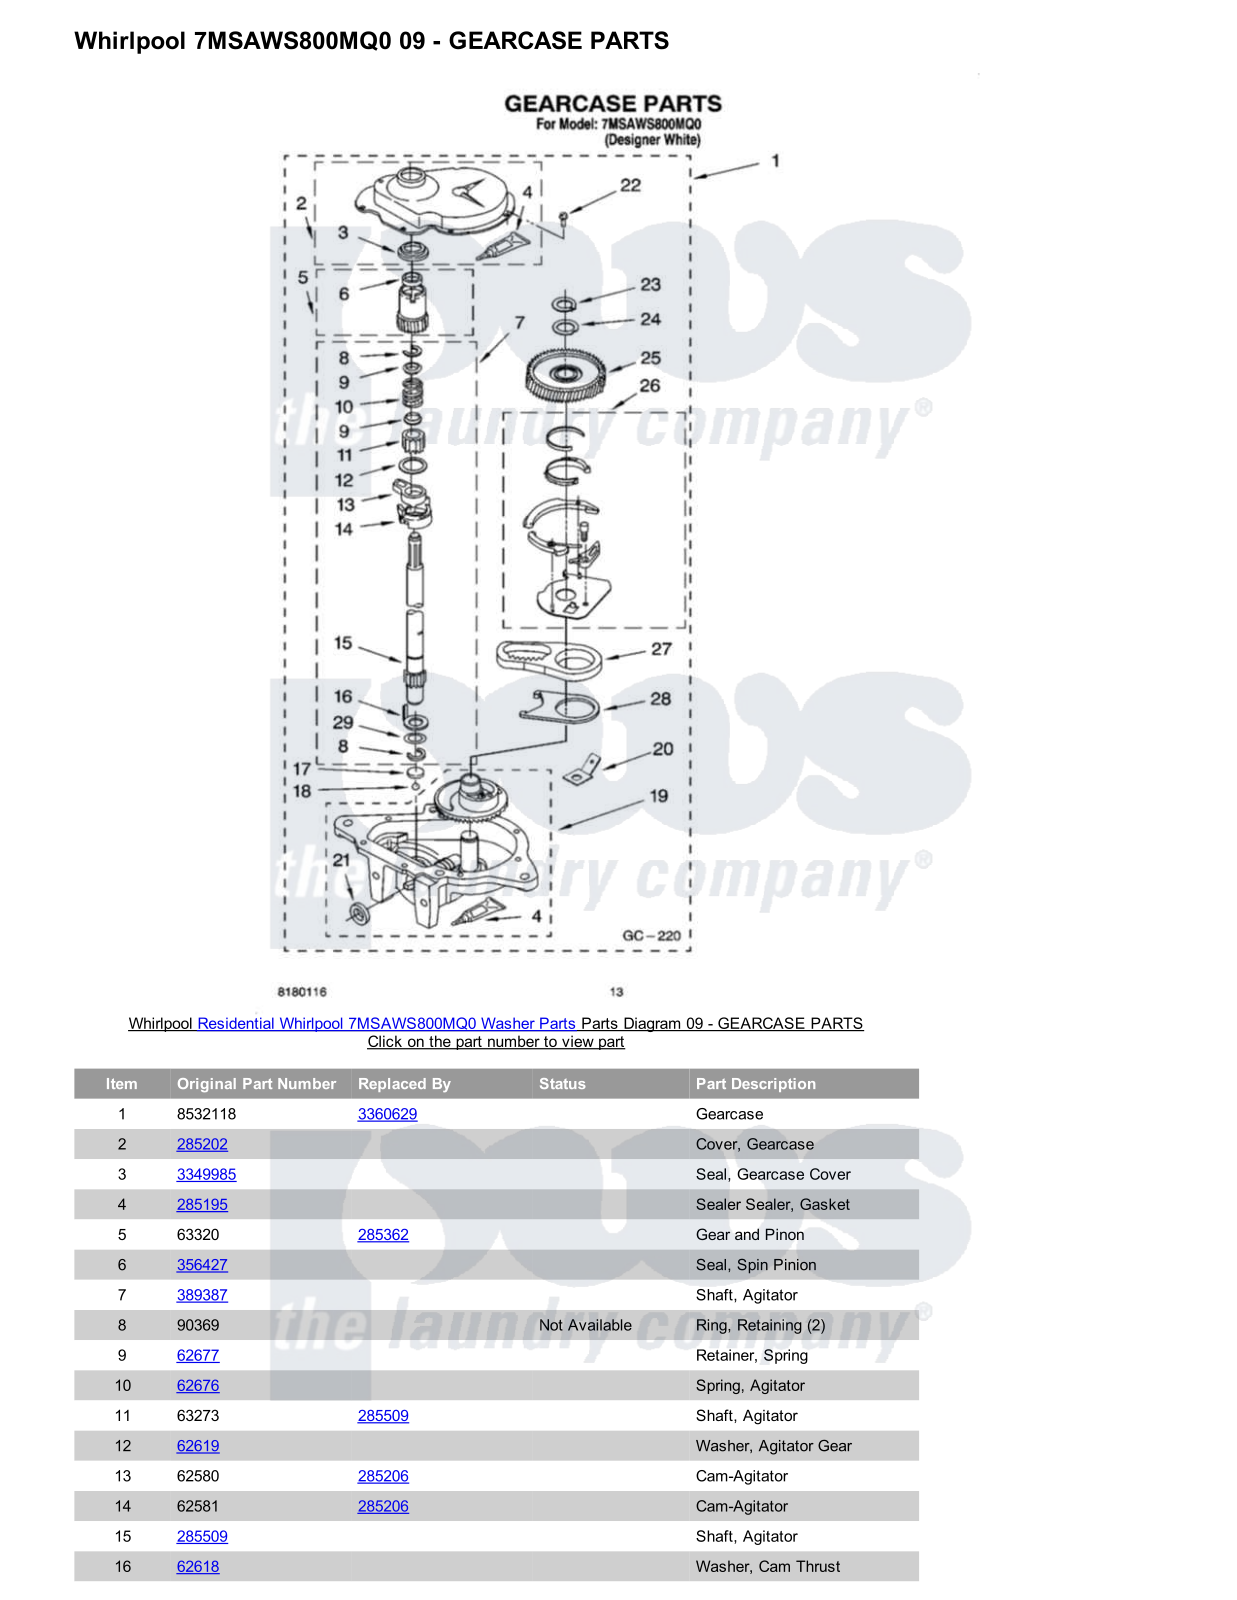 Whirlpool 7MSAWS800MQ0 Parts Diagram